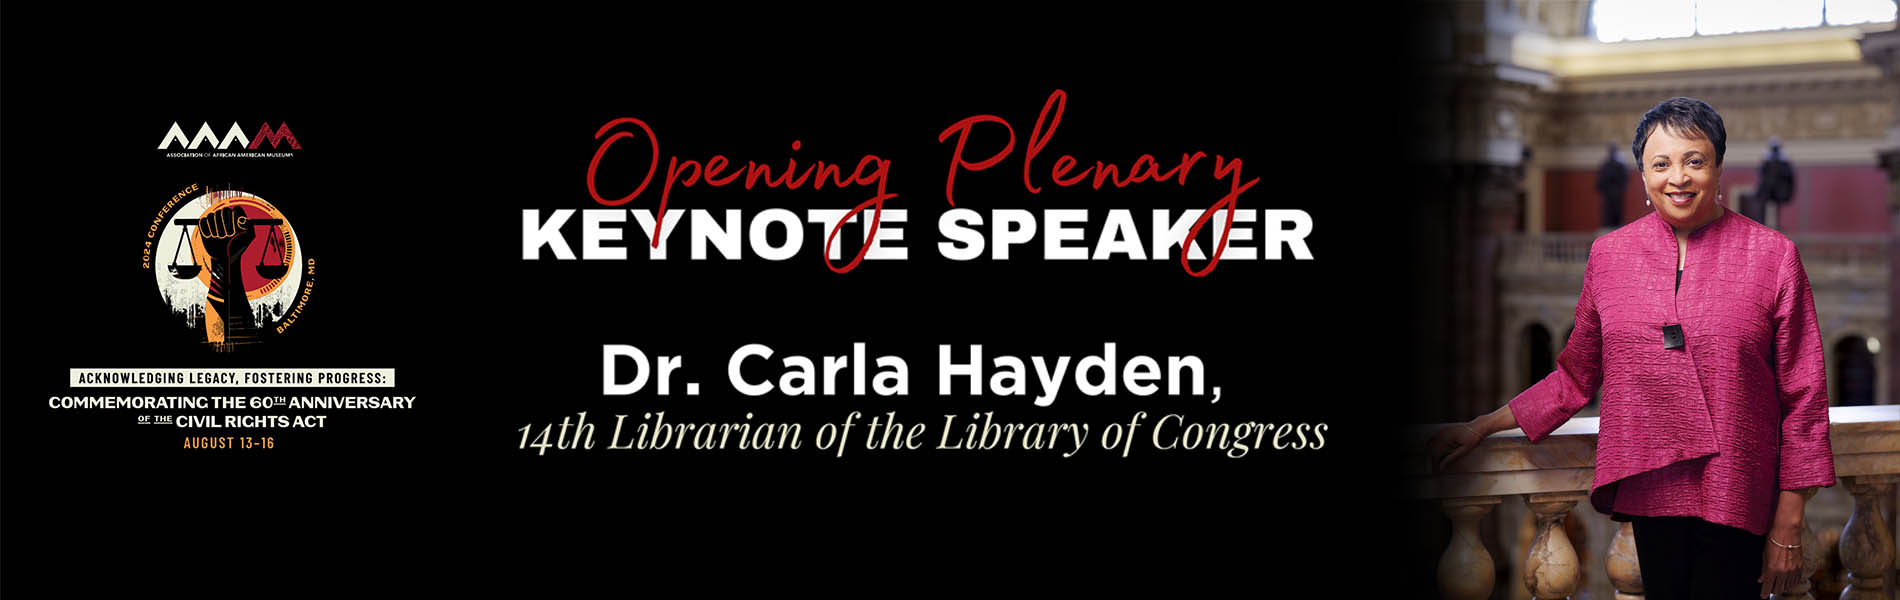 Opening Plenary keynote speaker, Dr. Carla Hayden